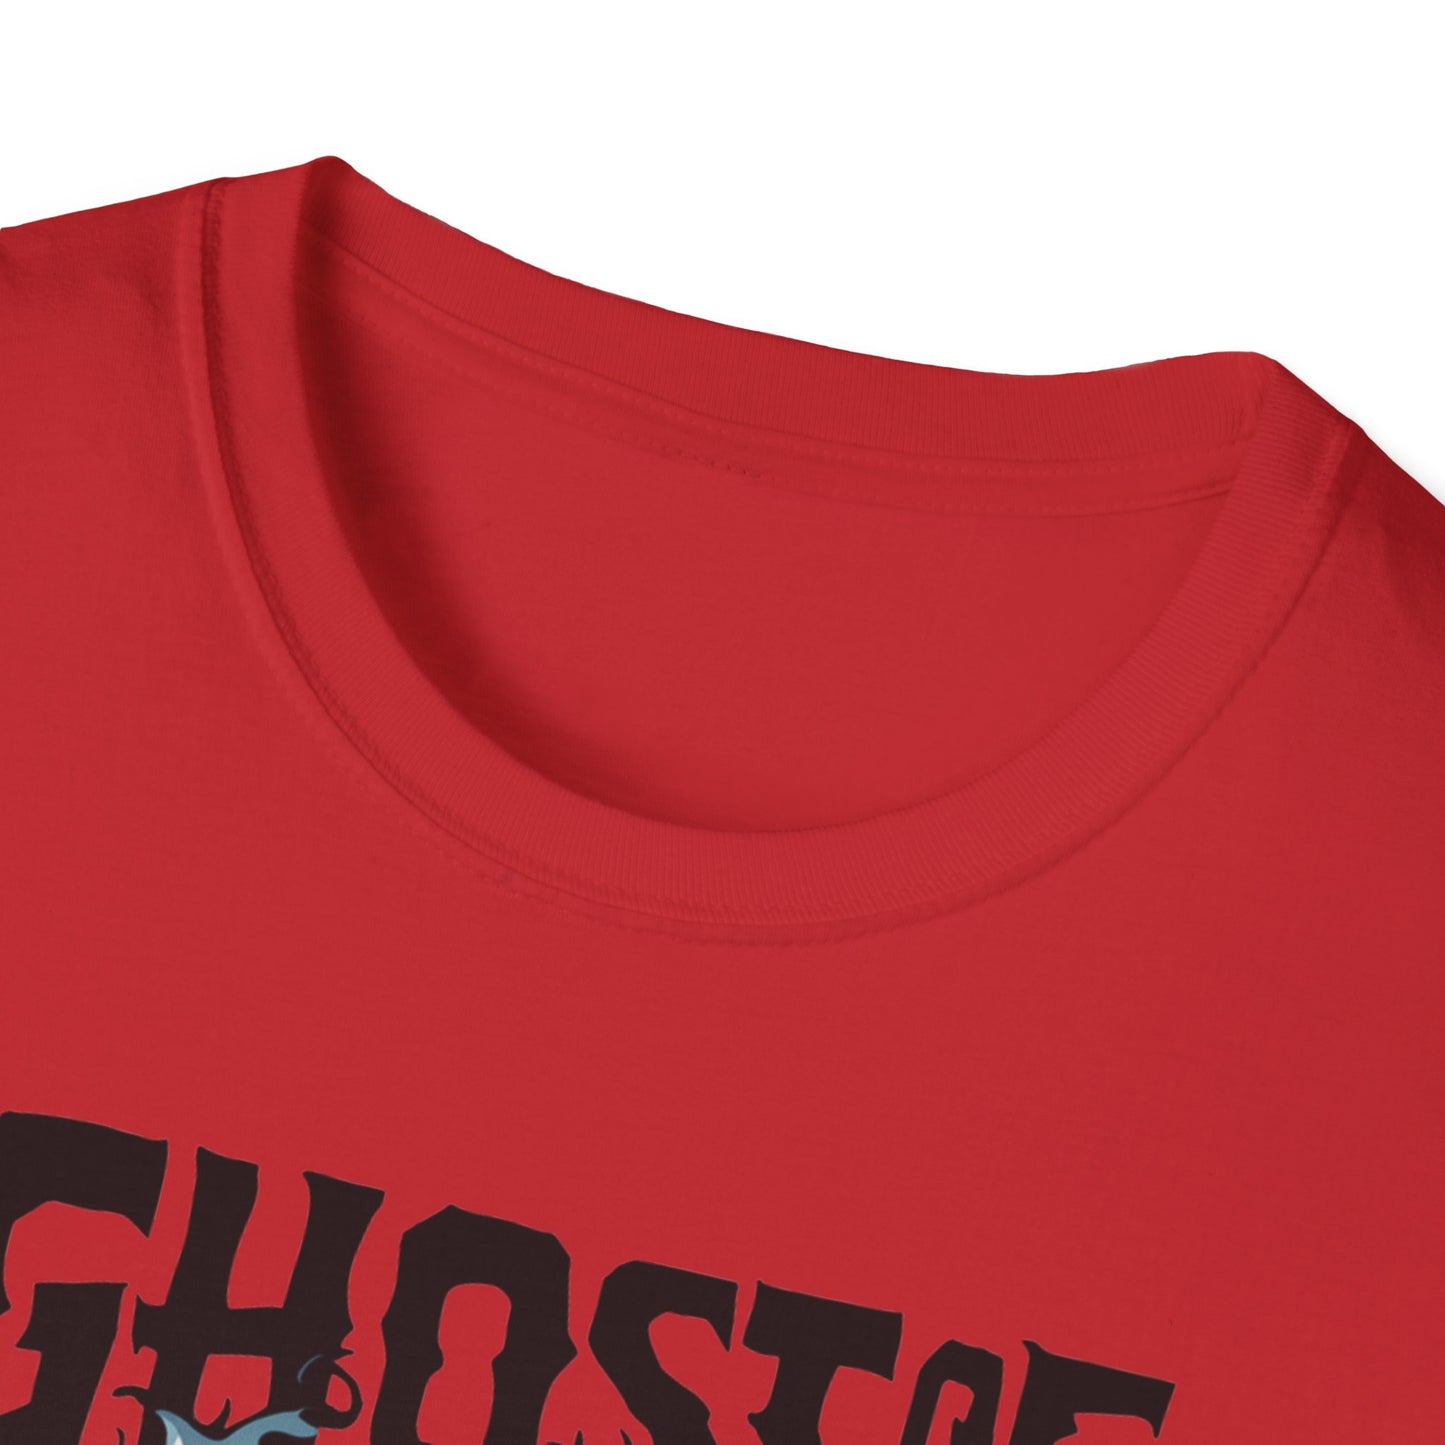 Ghost of Tsushima Tshirt Gift Video Game T-shirt Meme shirt